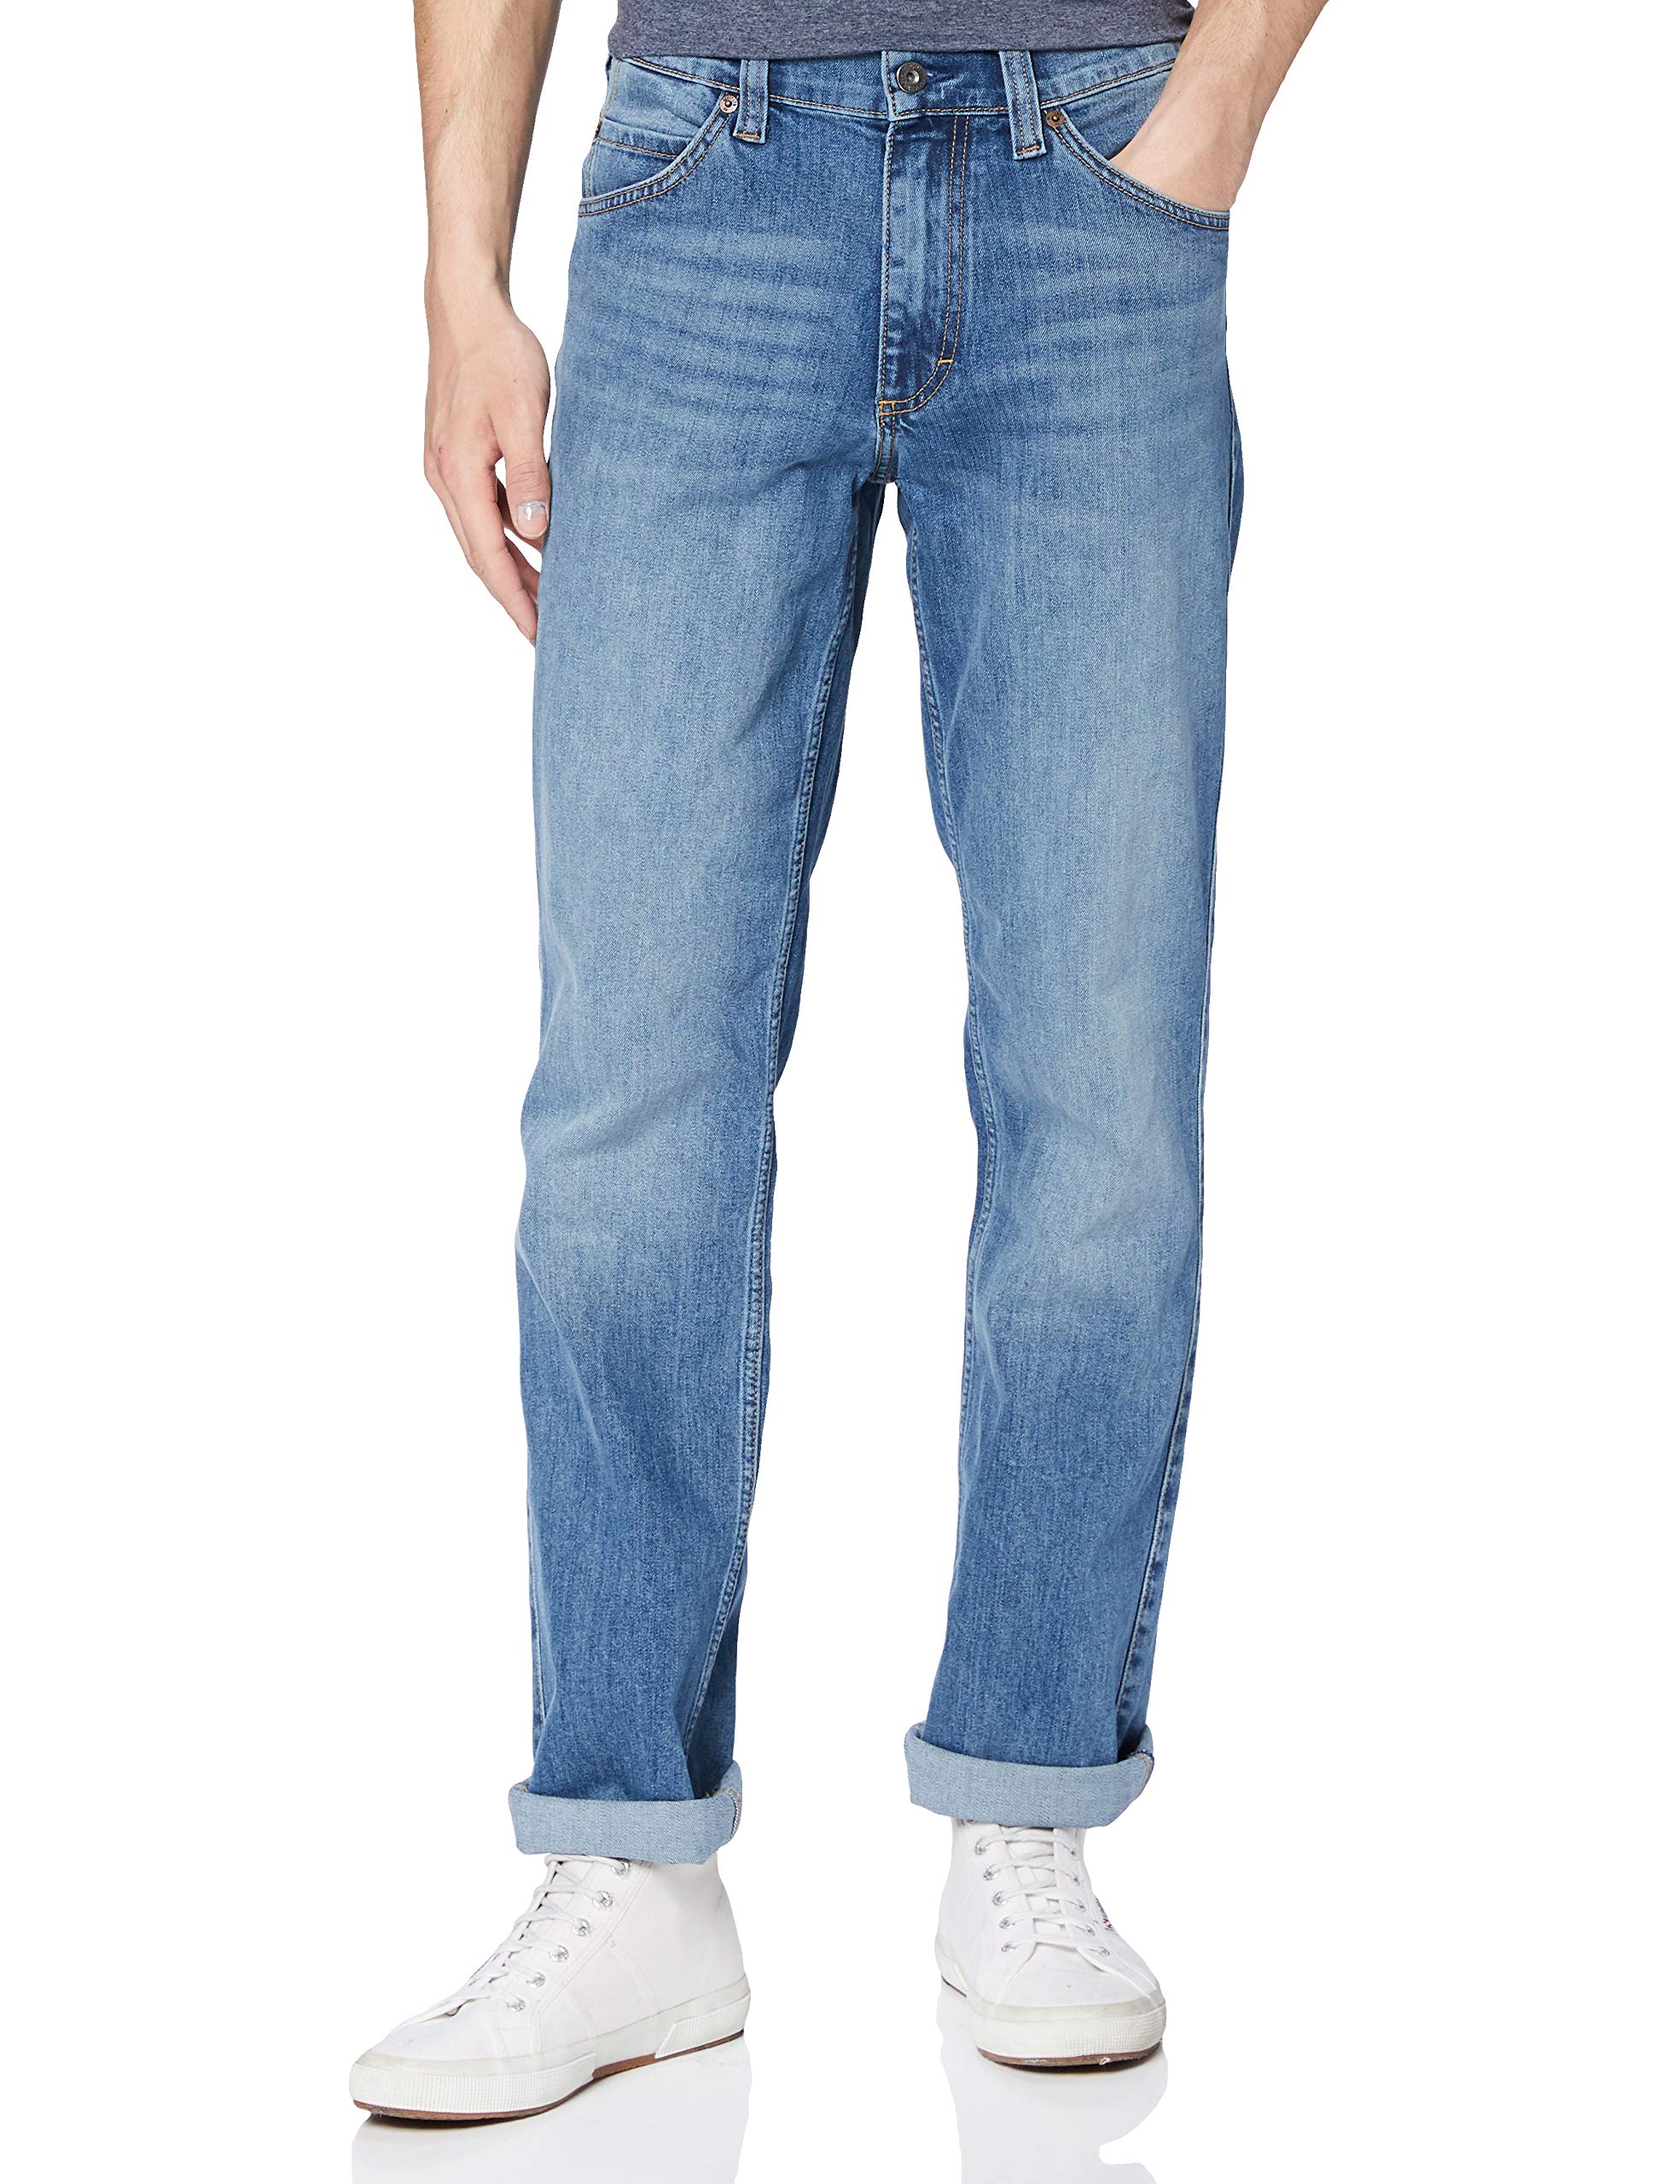 MUSTANG Herren tramper Jeans, 5000-582 Blau, 42W / 30L EU